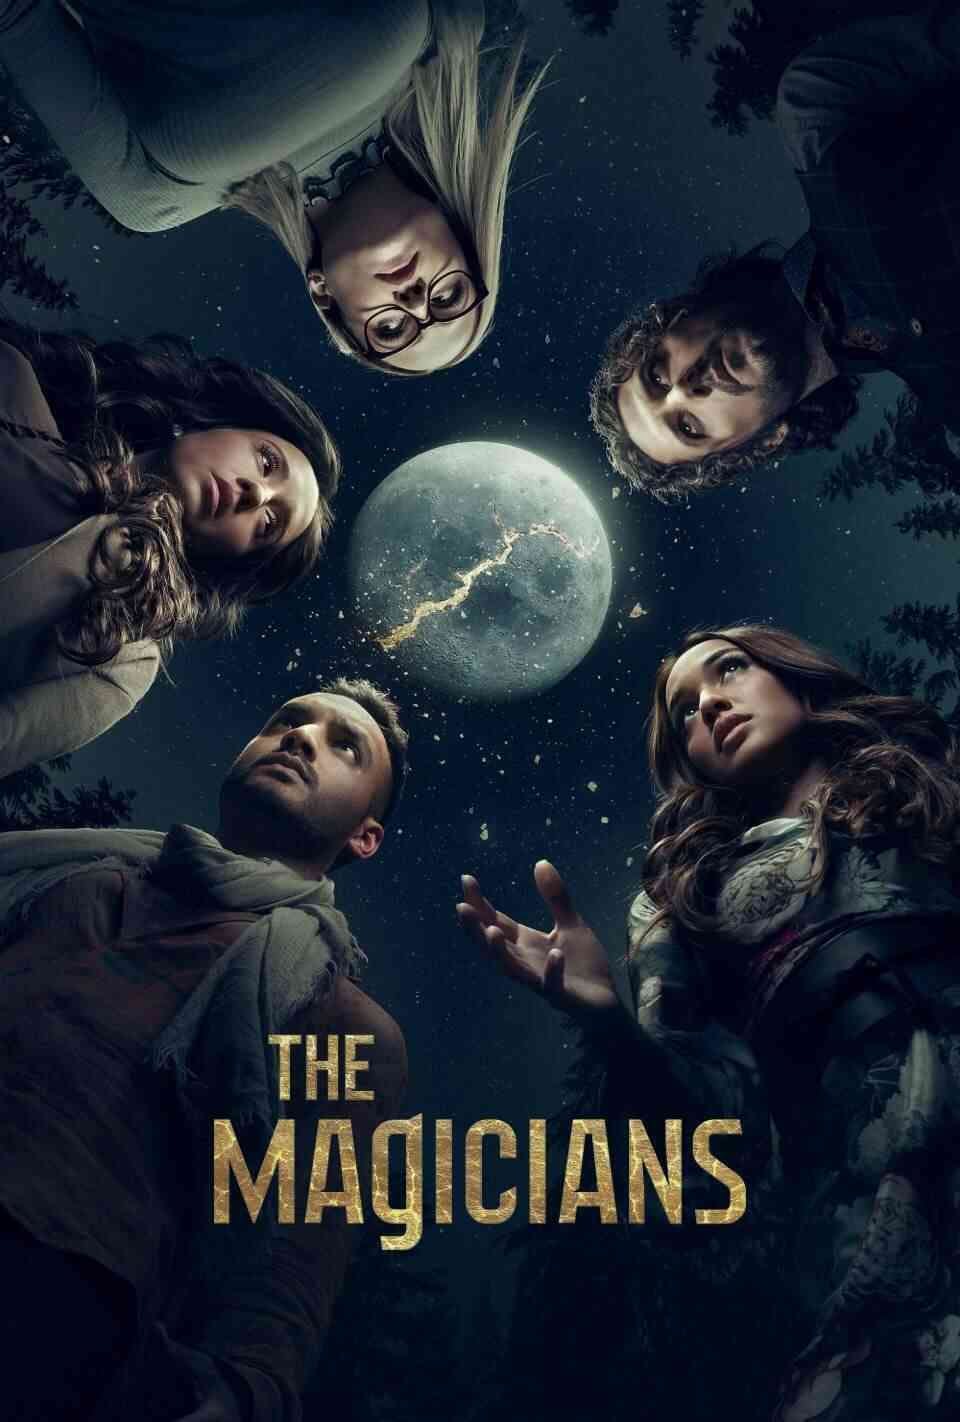 Read The Magicians screenplay.